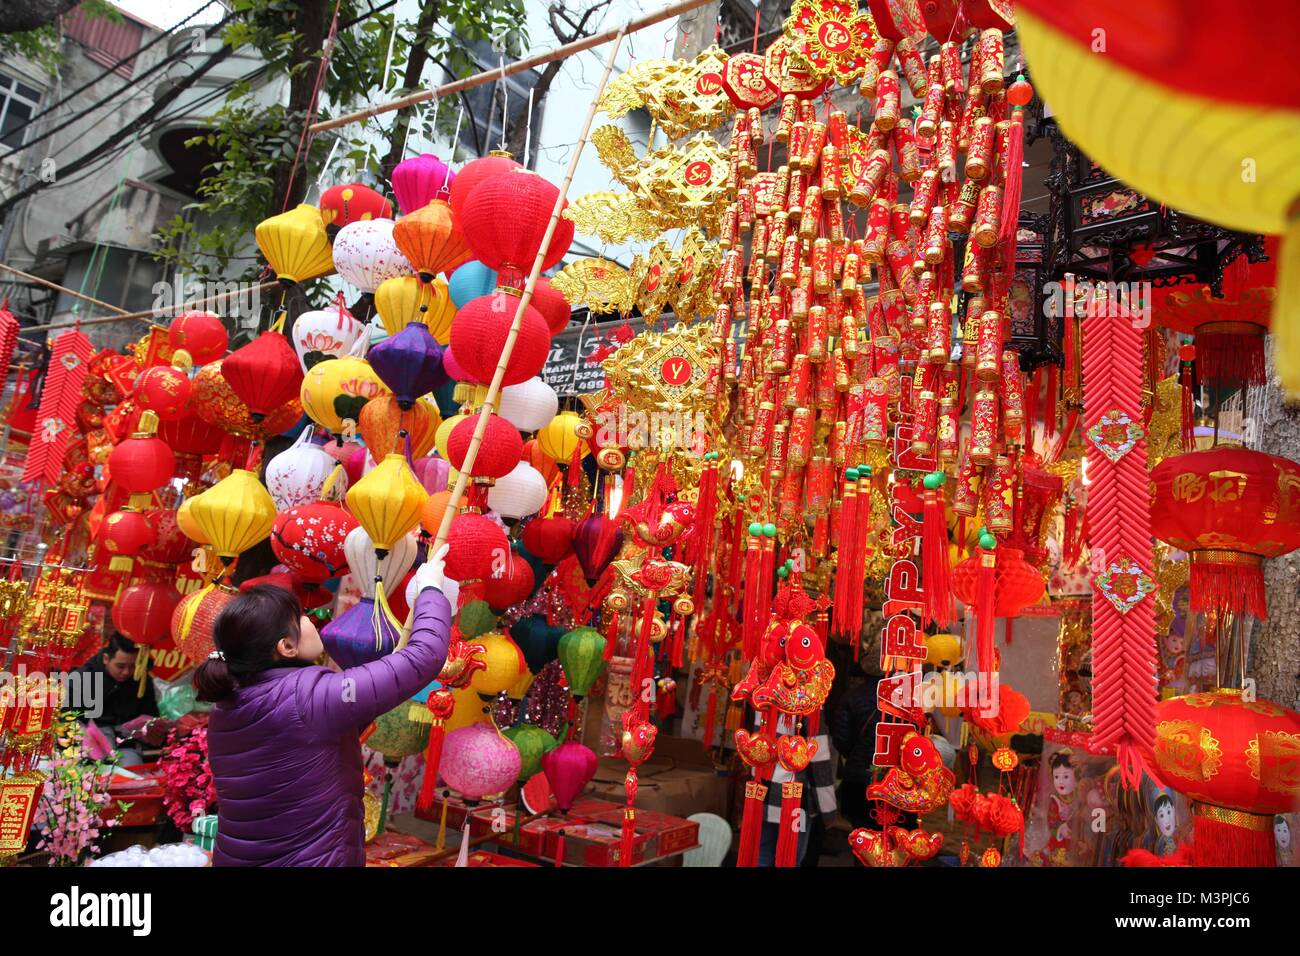 Hanoi Vietnam 12th Feb 18 A Vendor Arranges Lunar New Year Decorations At A Stall In Hanoi Capital Of Vietnam Feb 12 18 The Lunar New Year Festival Also Called Tet In